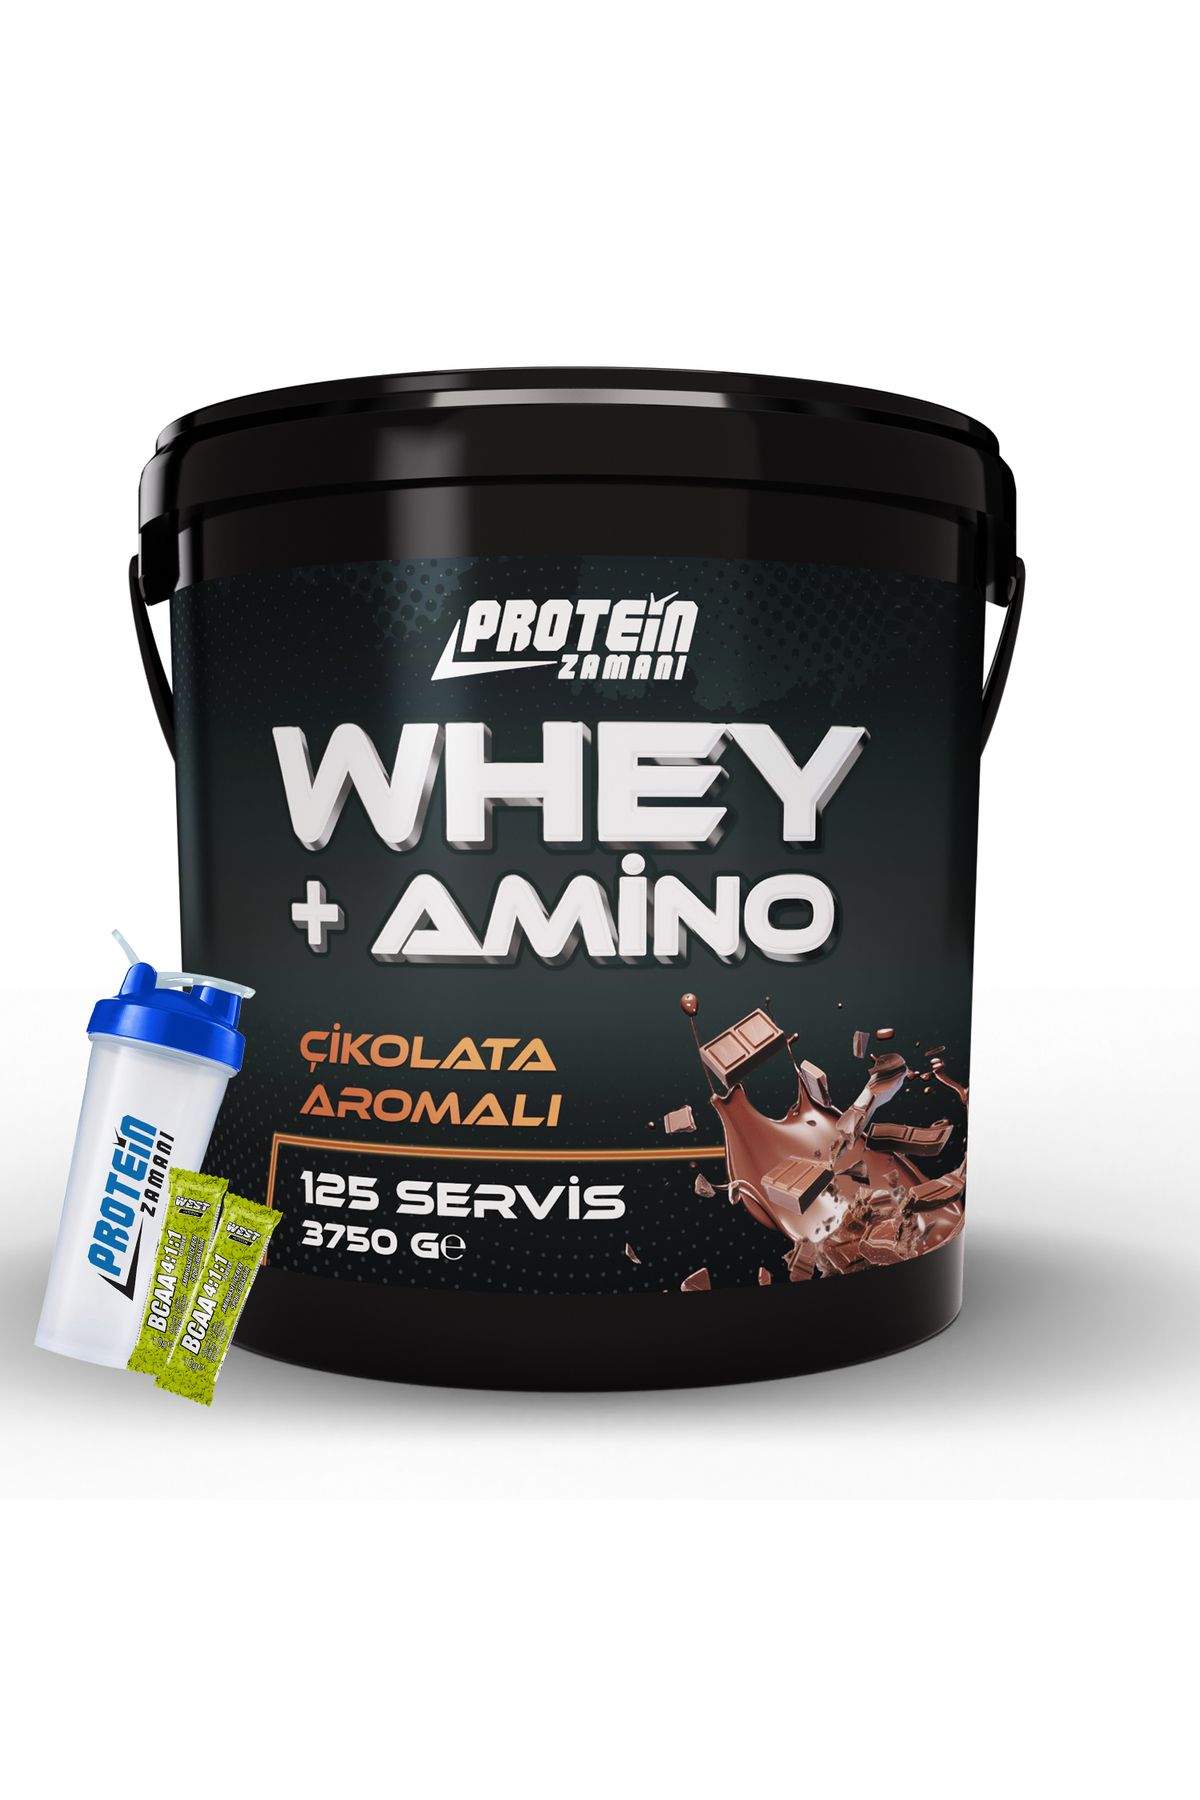 Protein Zamanı Whey + Amino Protein Tozu Çikolata Aromalı 3750 Gram - Shaker Hediyeli